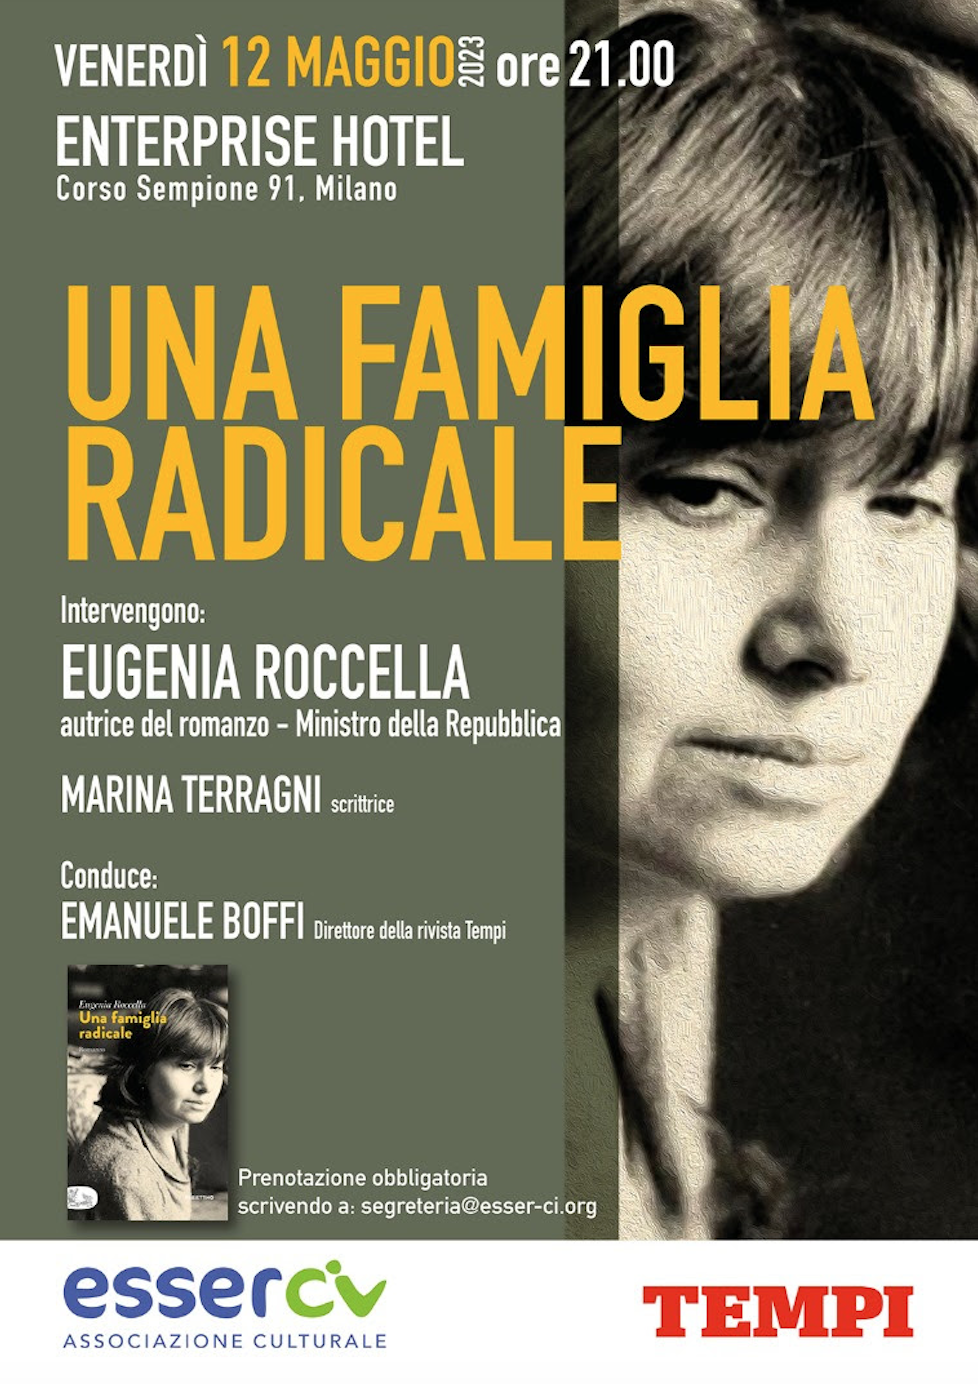 Featured image for “Milano: “Una Famiglia Radicale””